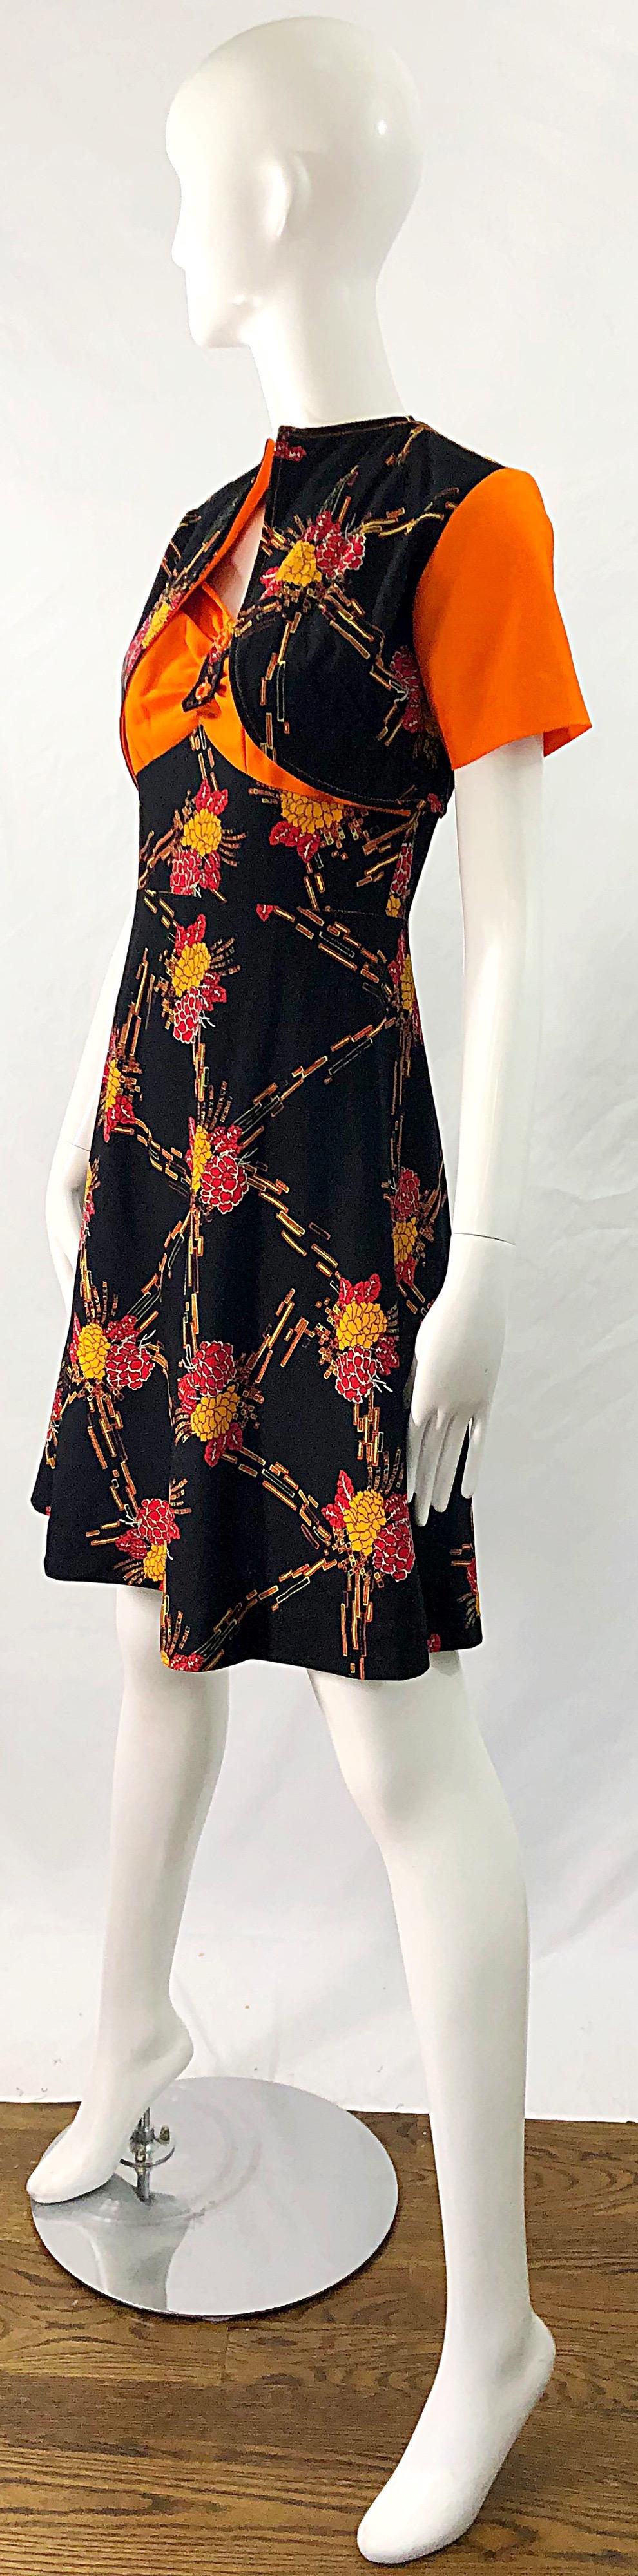 1970s Autumnal Digital Floral Print Knit Vintage 70s A Line Dress + Bolero Top For Sale 5